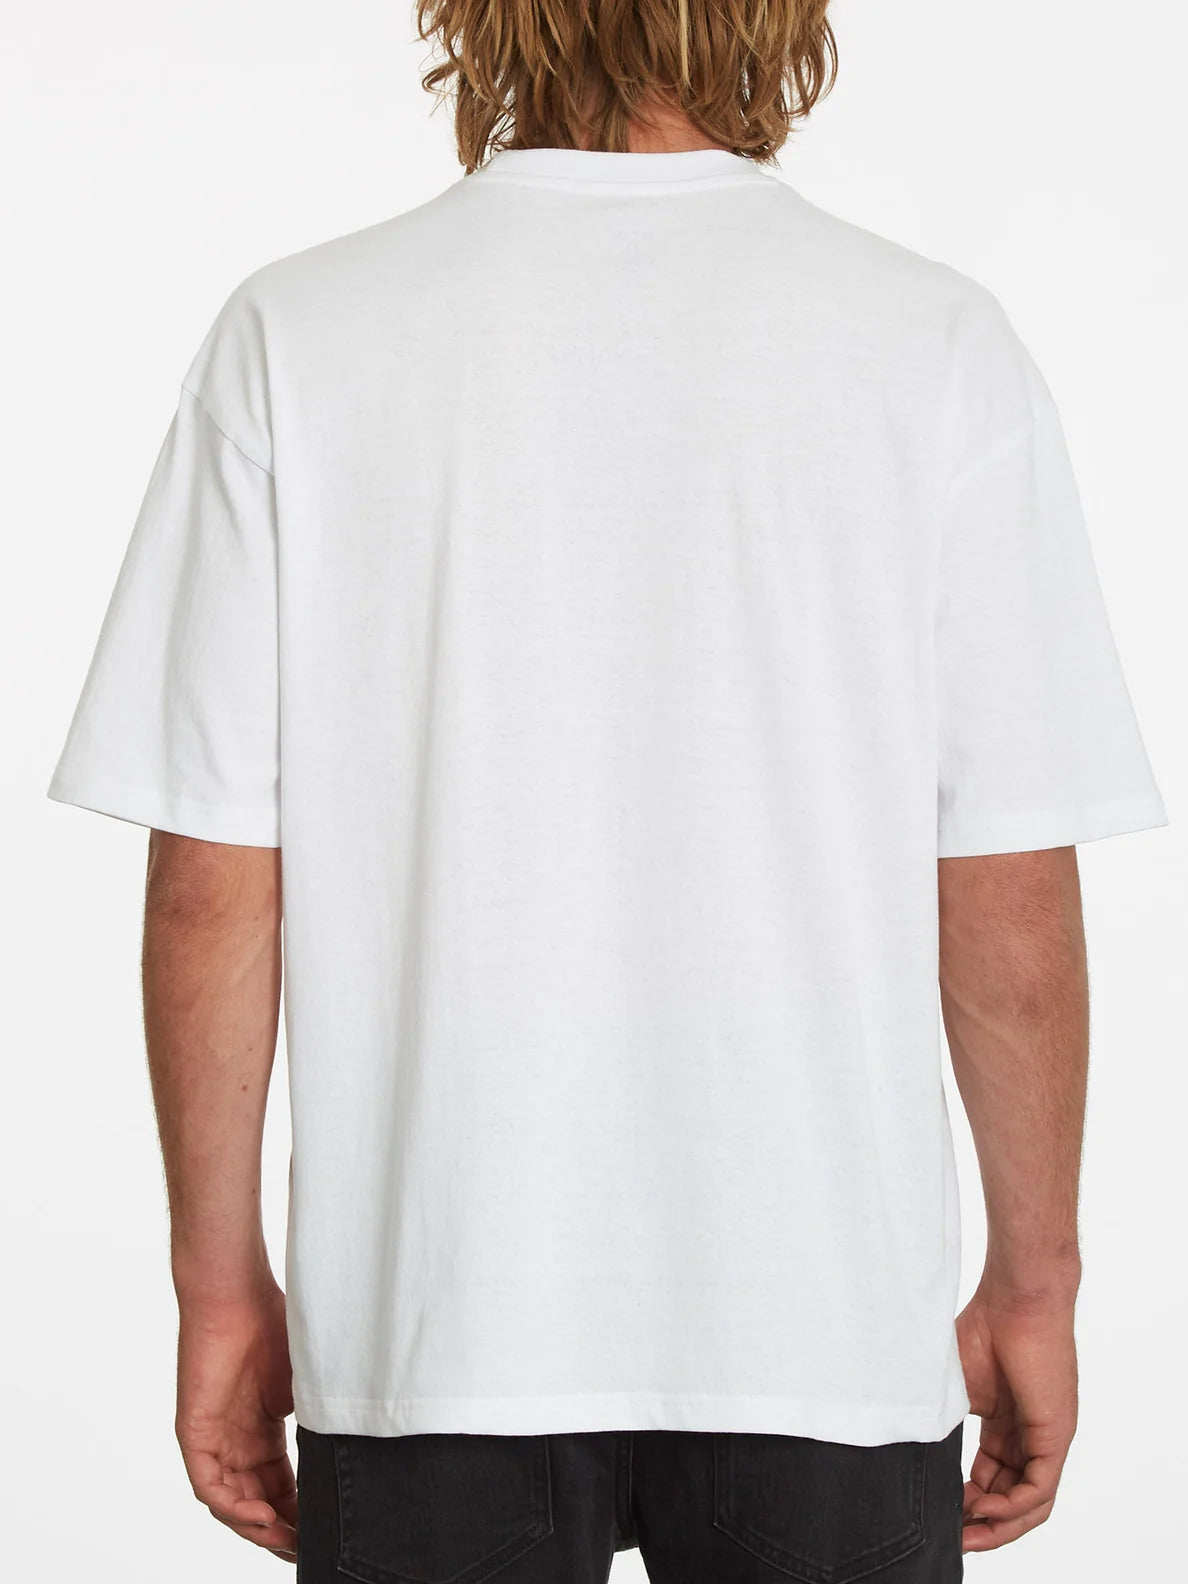 Volcom Hallo Schule weißes T-Shirt | Meistverkaufte Produkte | Neue Produkte | Neueste Produkte | surfdevils.com